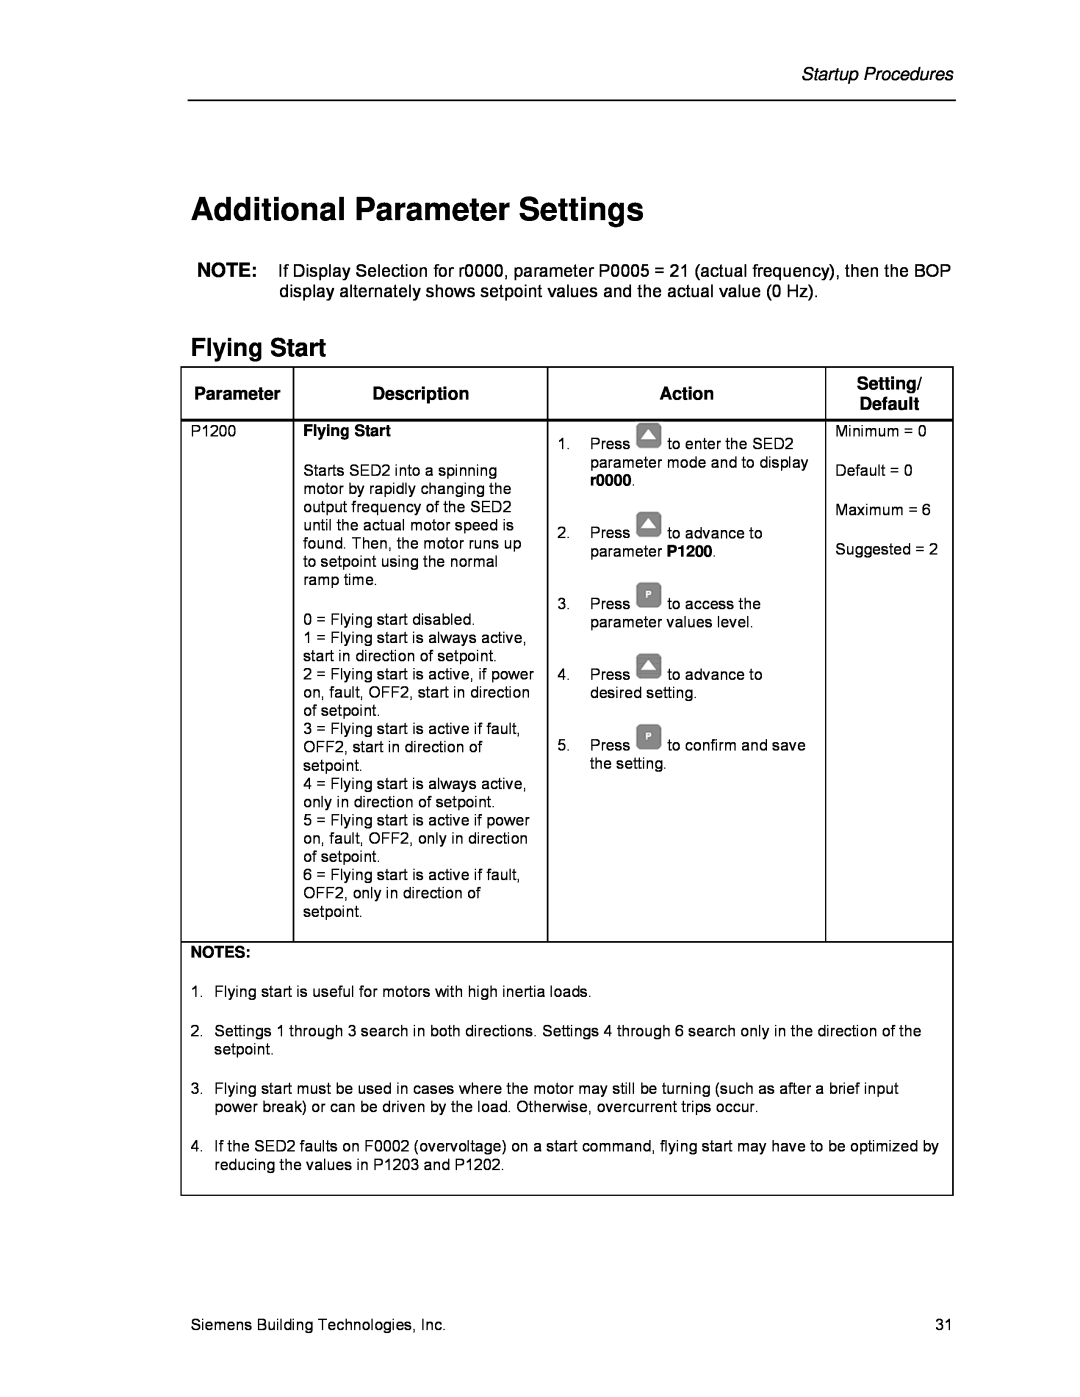 Siemens 125-3208 operating instructions Additional Parameter Settings, Flying Start, r0000 